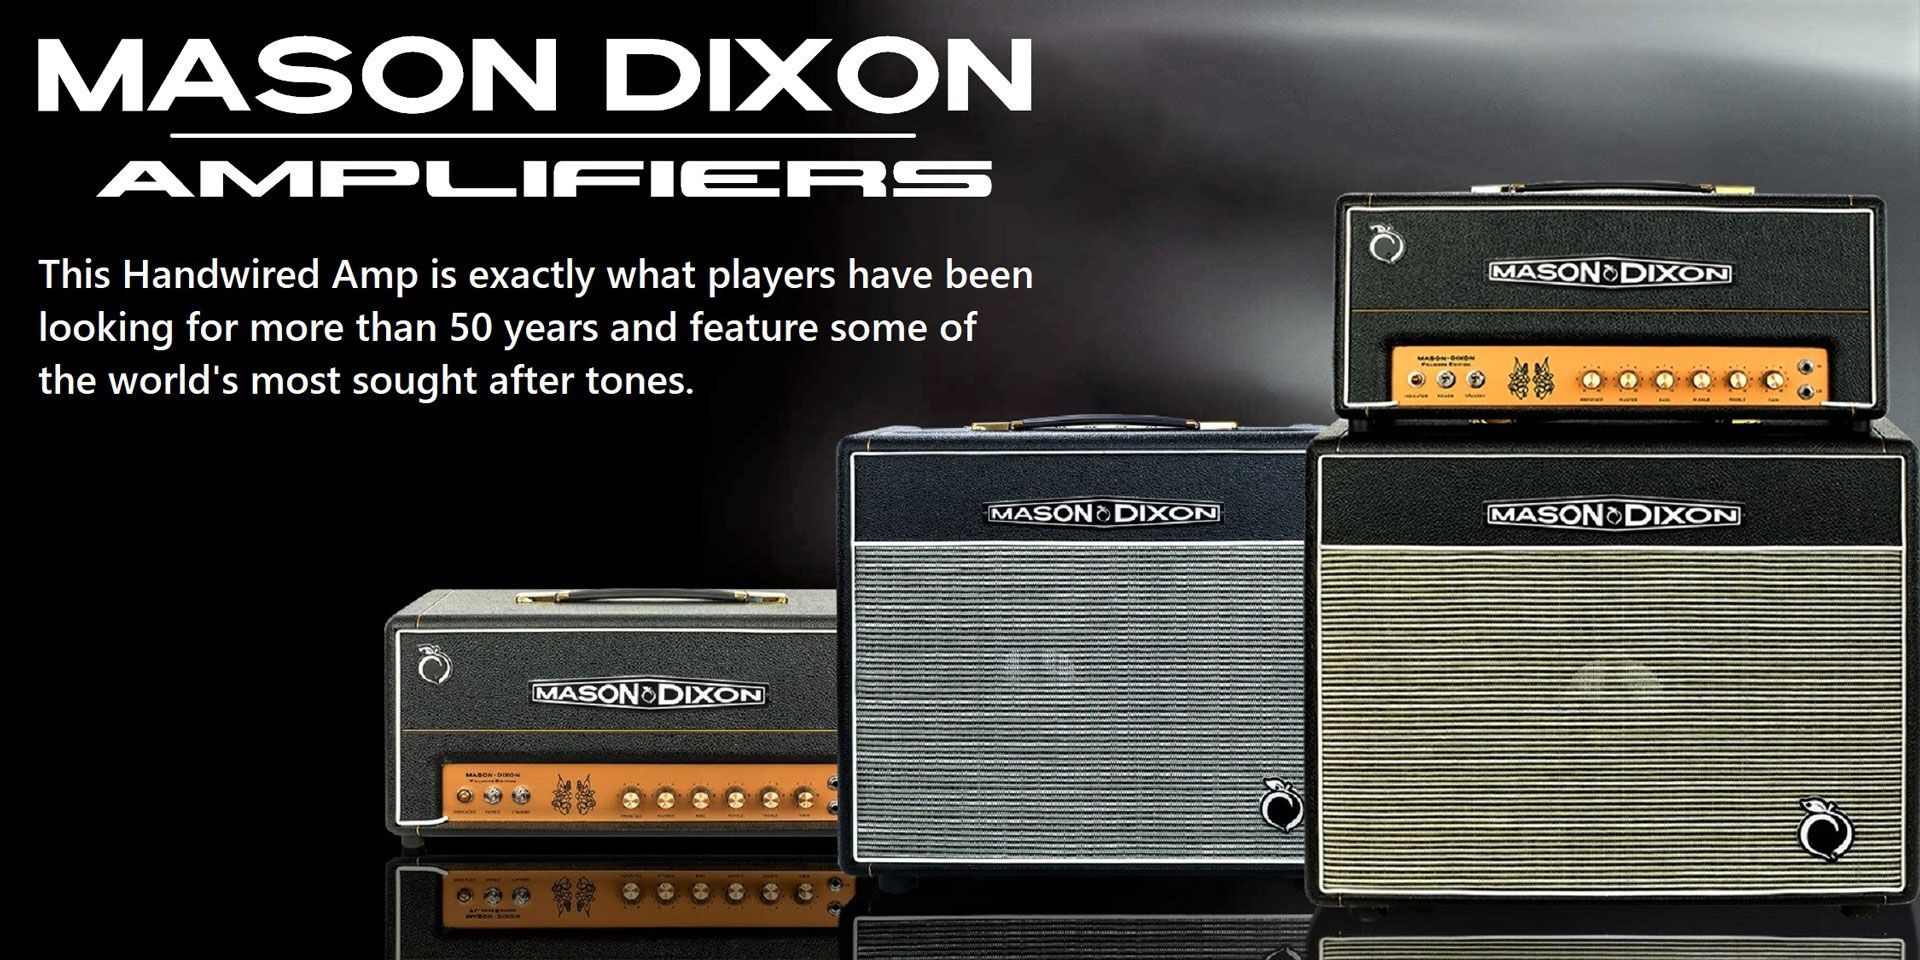 Mason-Dixon amplifiers